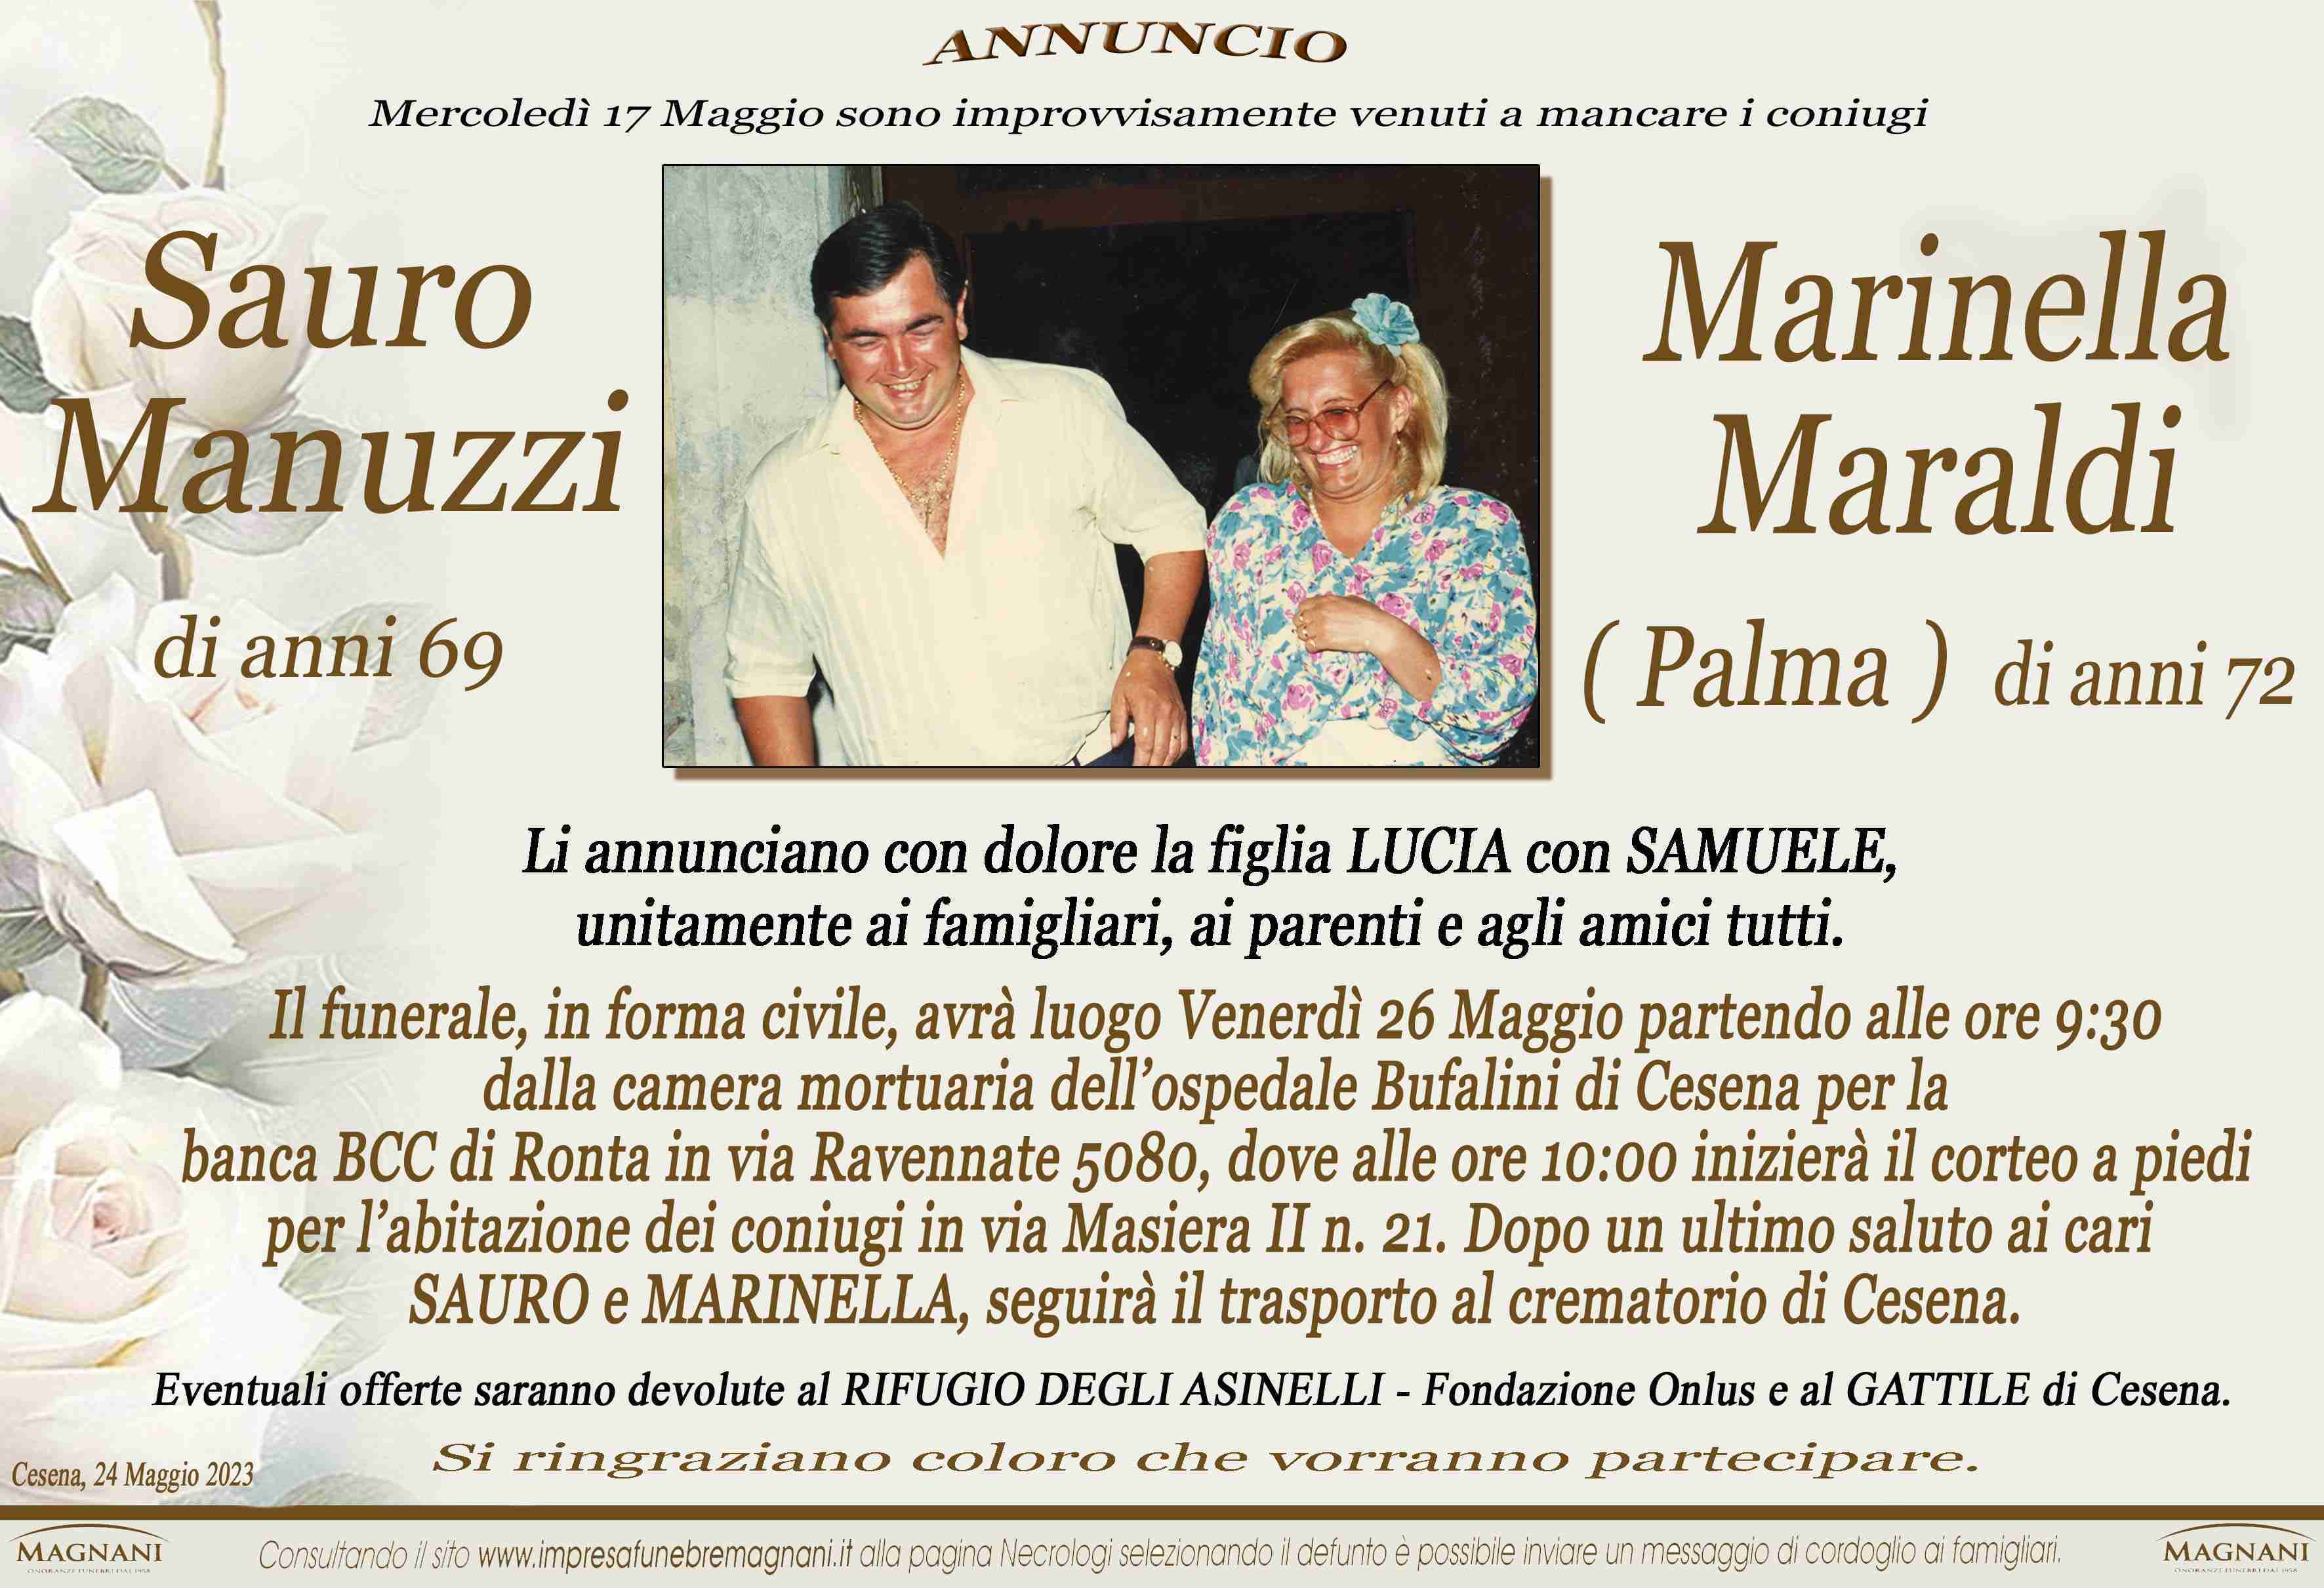 Sauro Manuzzi